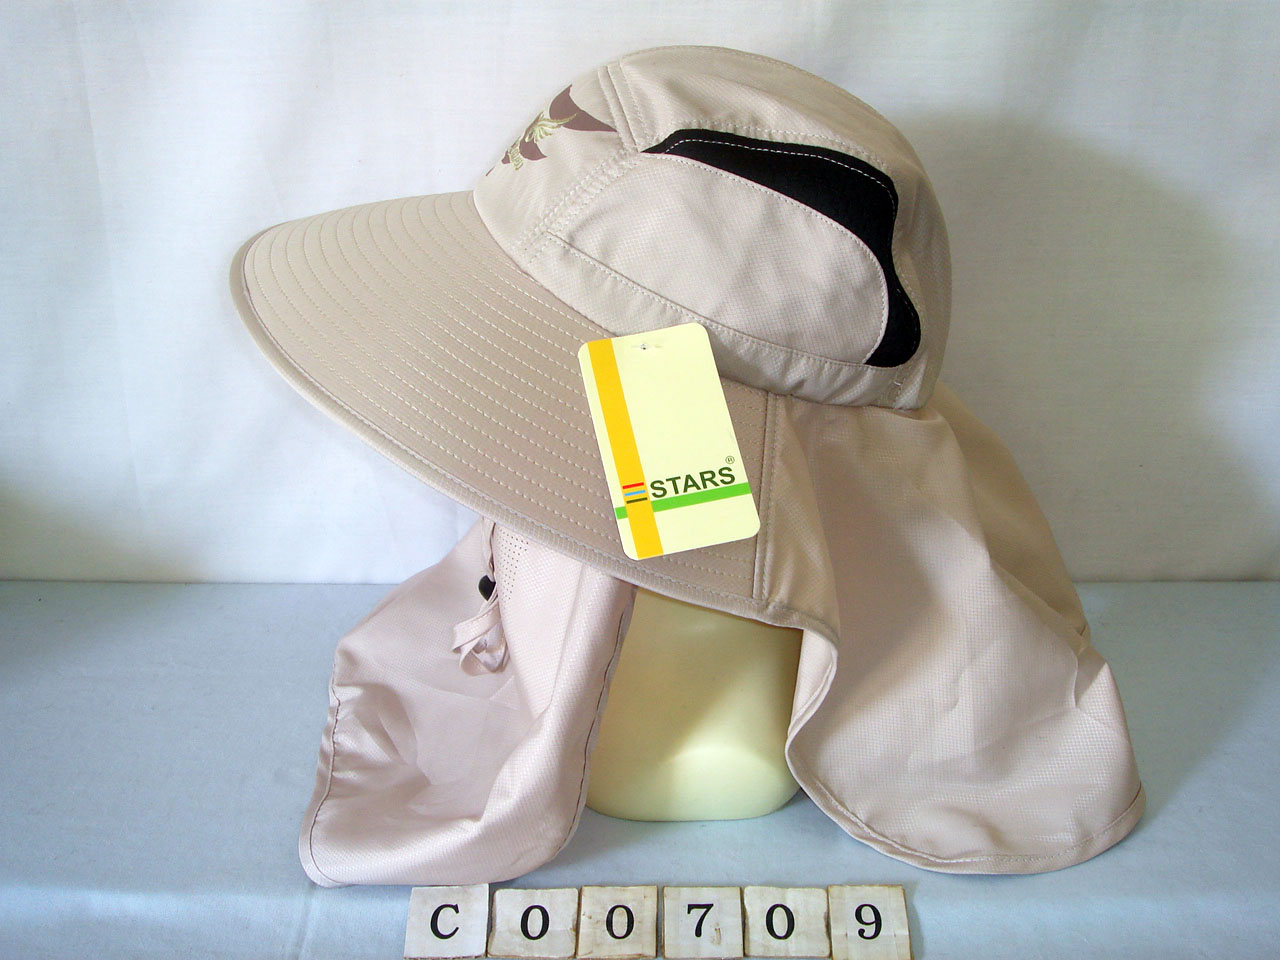 CO0709 固定式後披 可拆式前披 格子布五片式休閒帽子 SAN MATEO 三星製帽